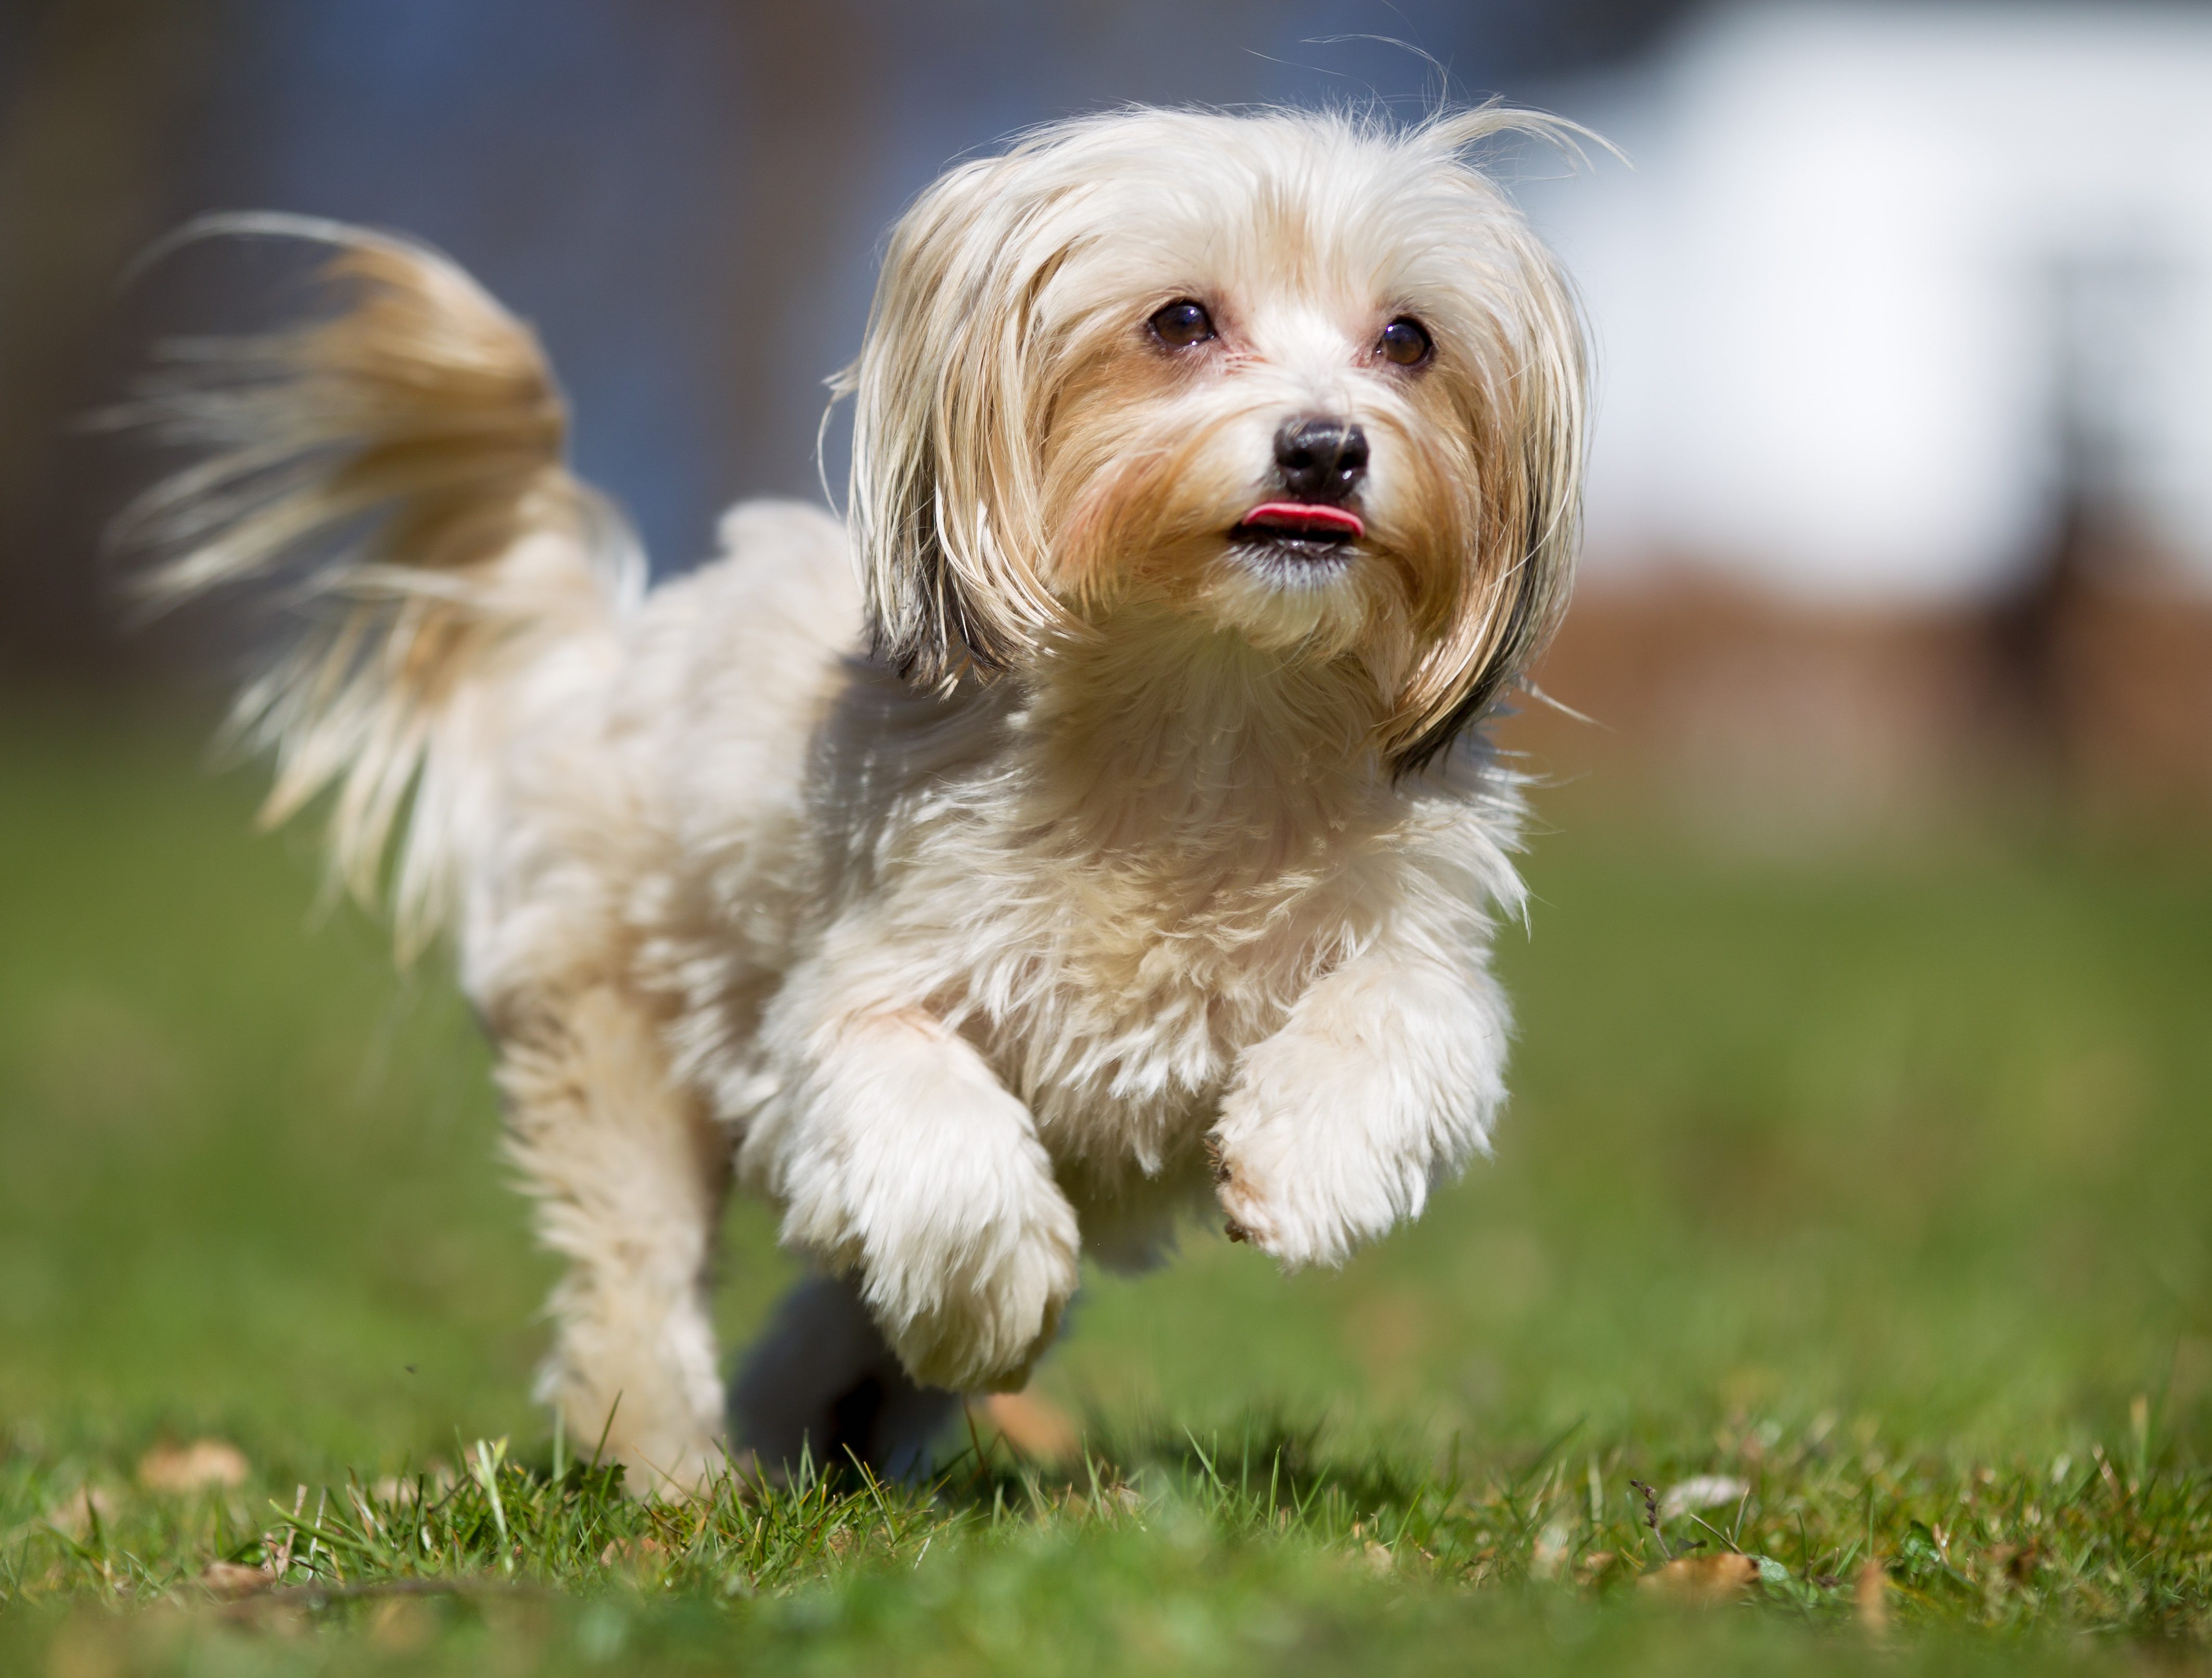 tan and white havanese dog running through grass